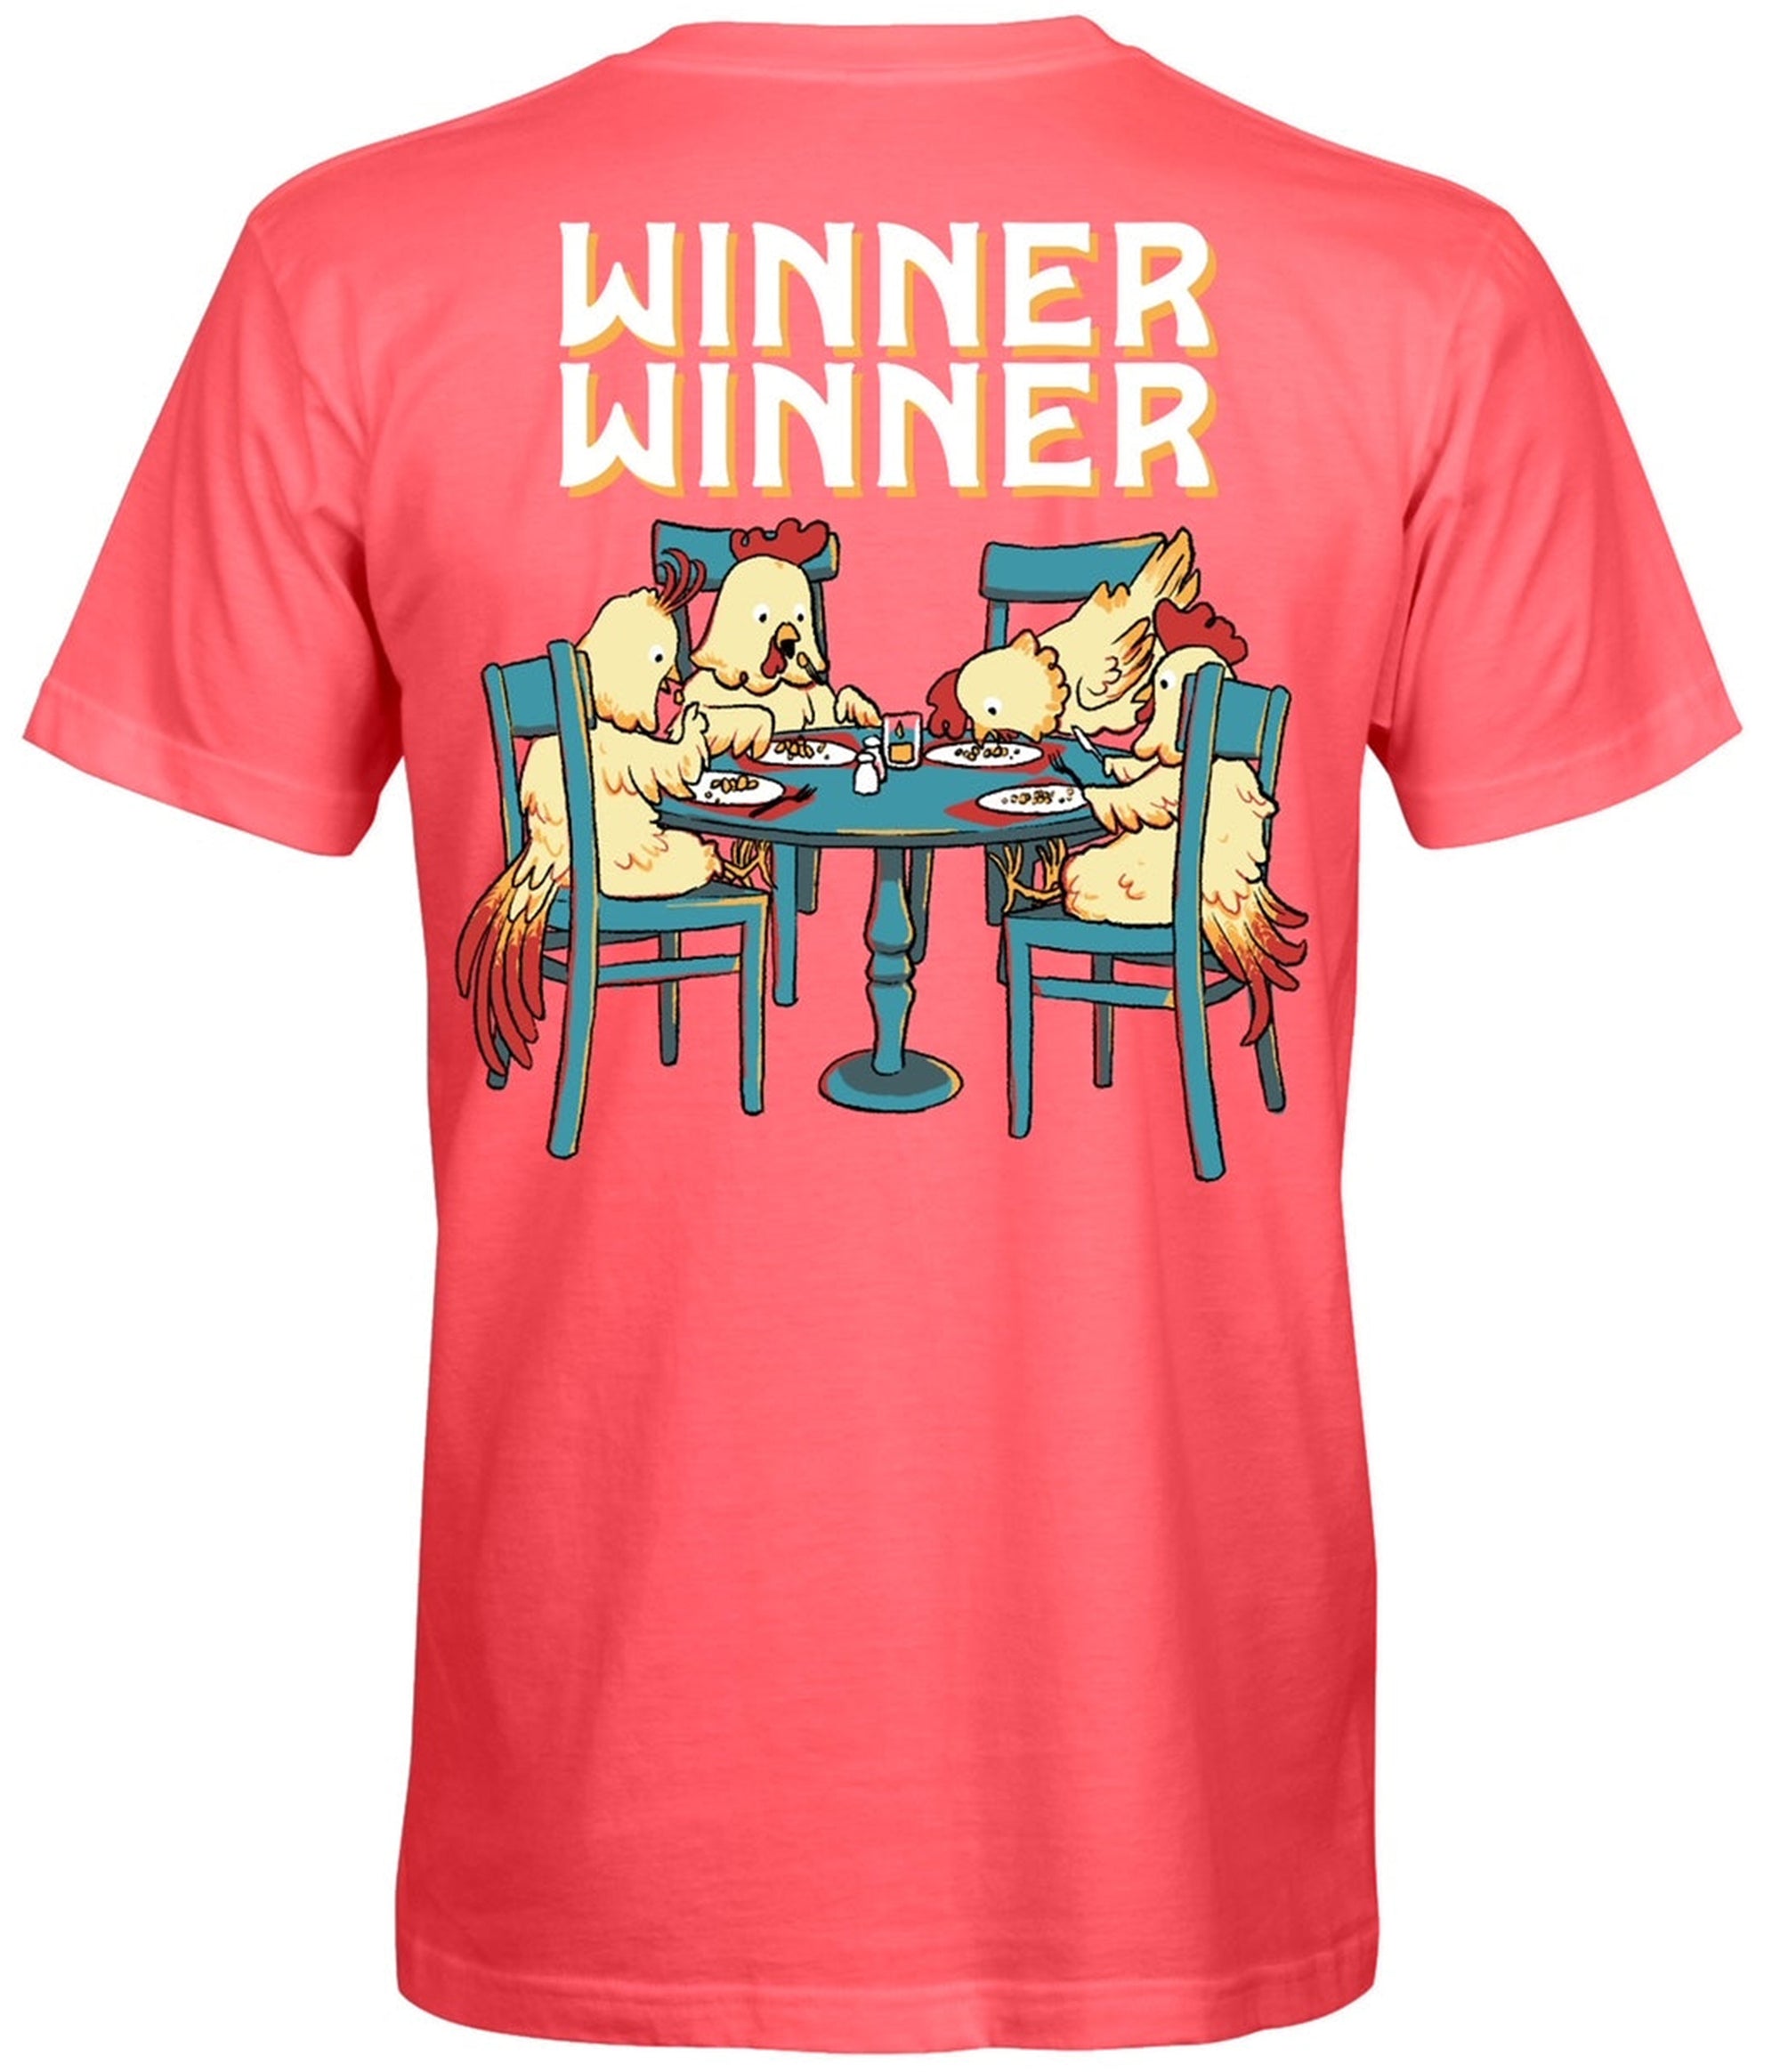 Southern Attitude Winner Winner Chicken Dinner T-Shirt